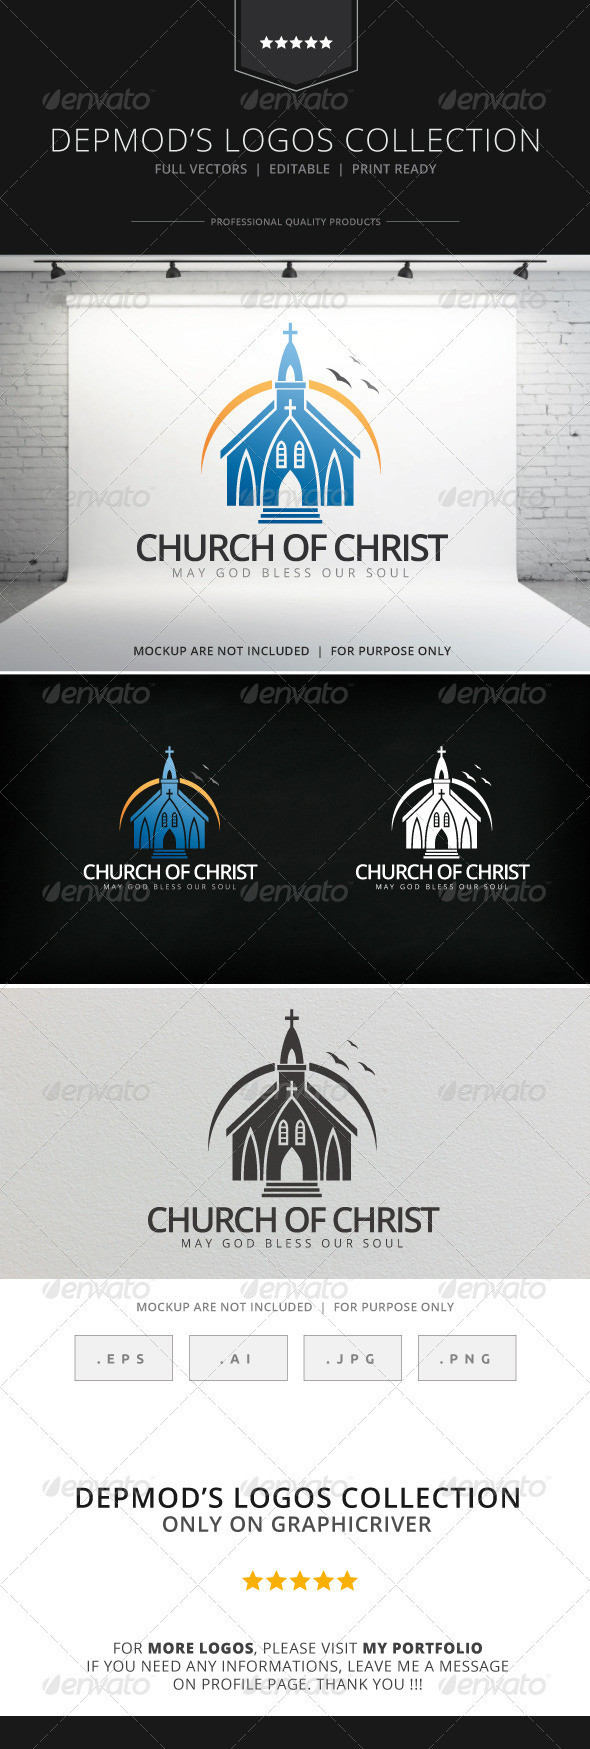 Church of christ logo